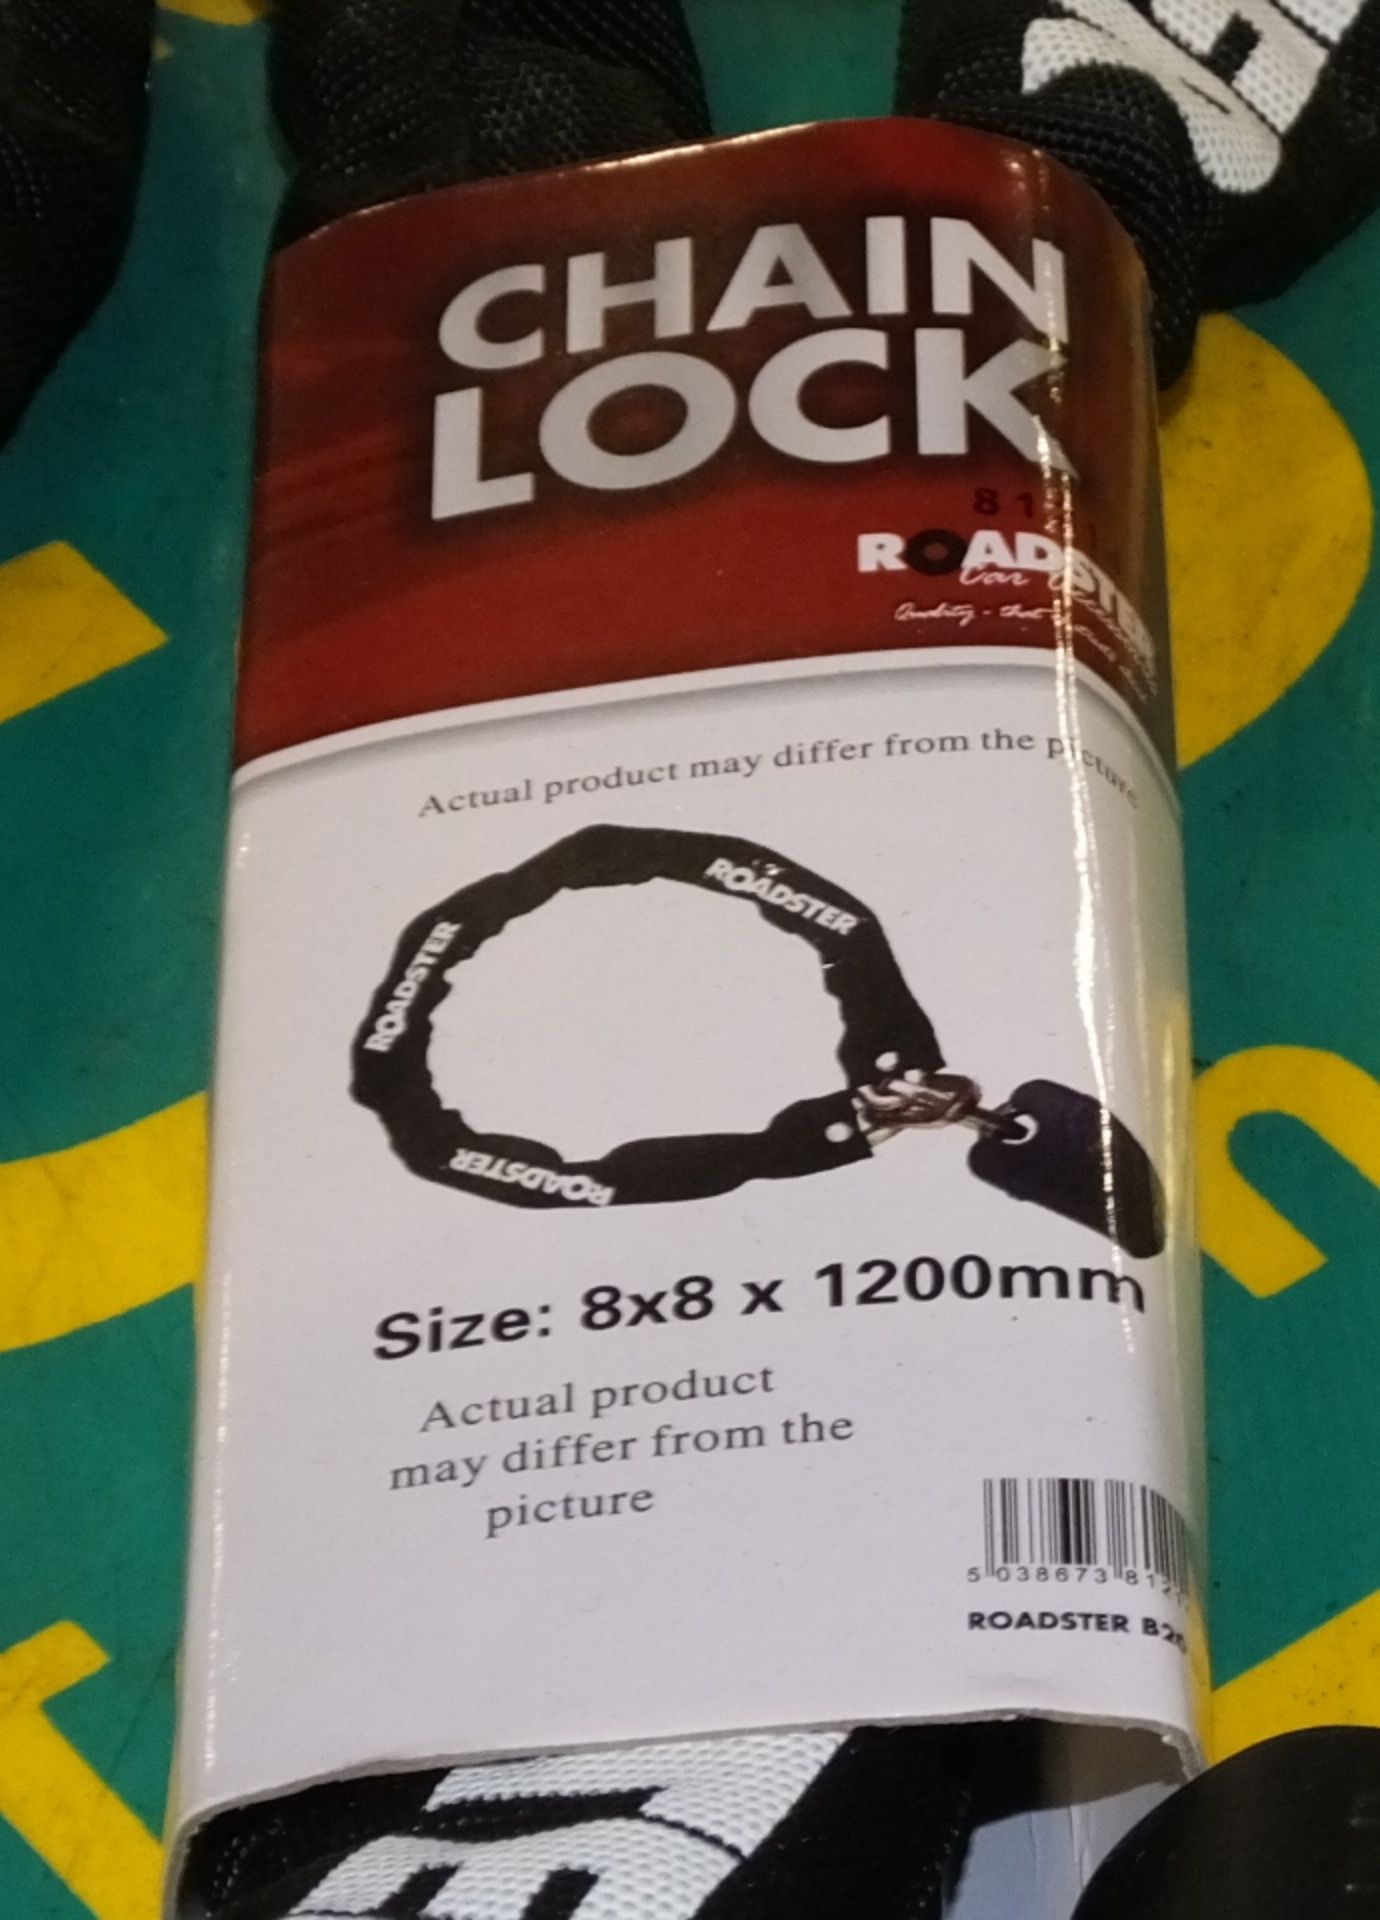 2x Roadster Chain Locks - 8x8 - 1200mm - Image 2 of 3